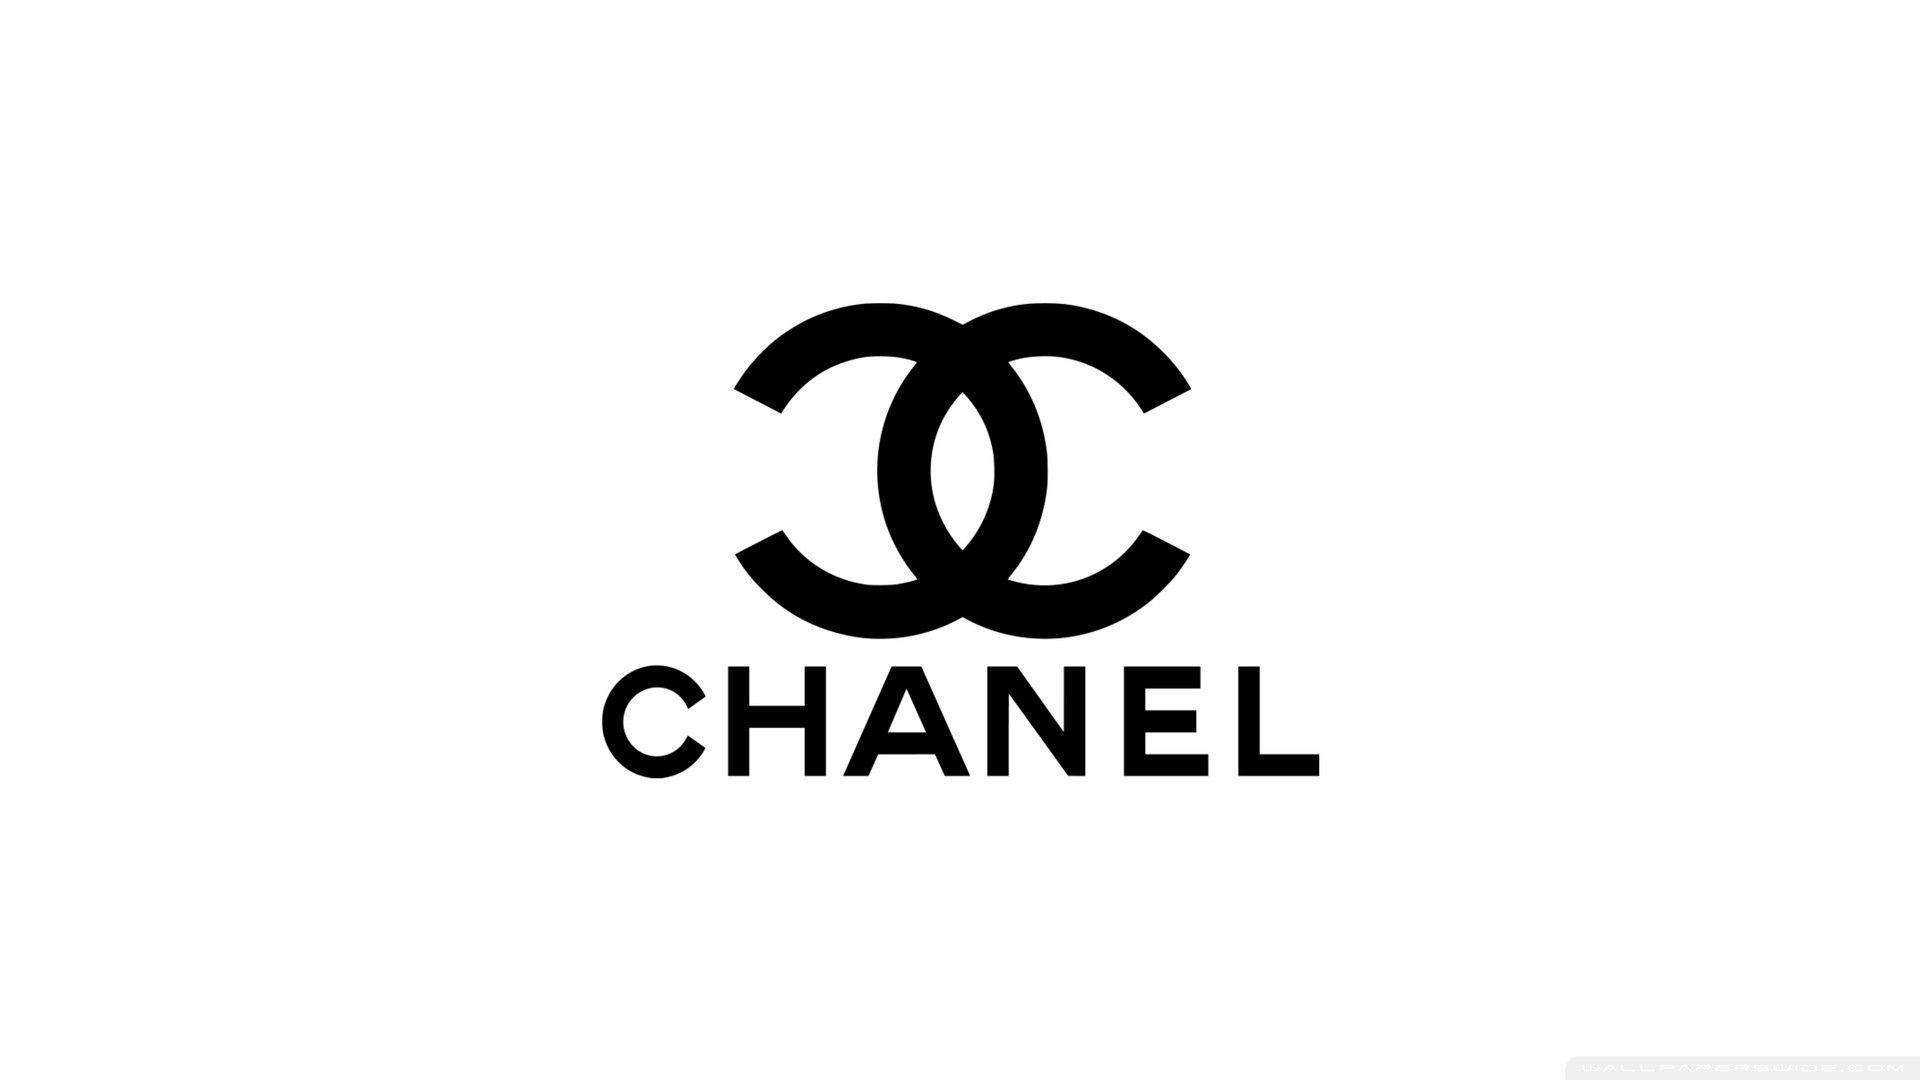 Chanel logo s on